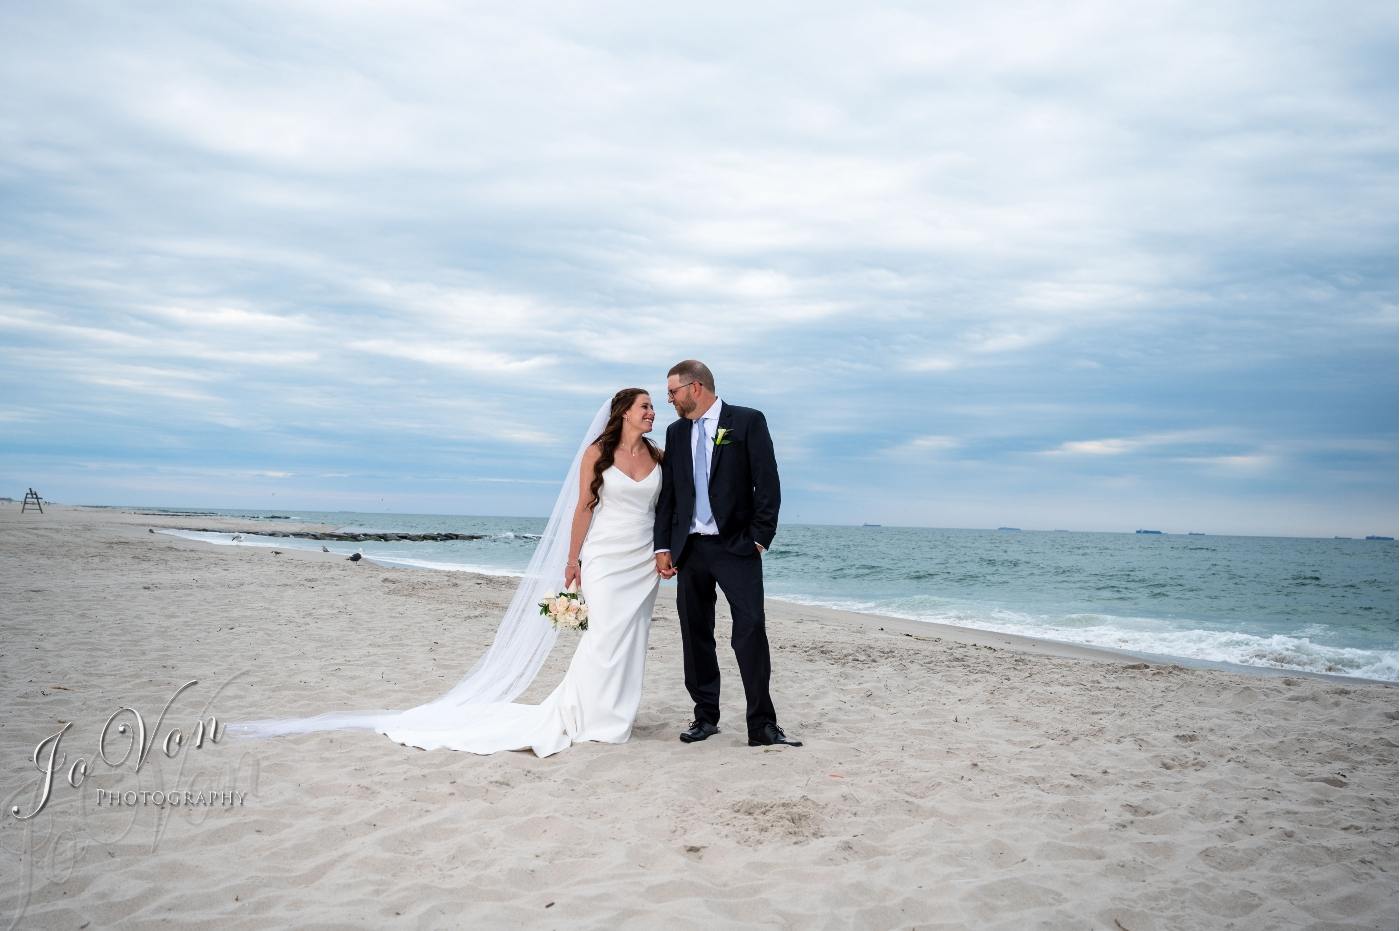 catering outdoor beach wedding venue Long Island